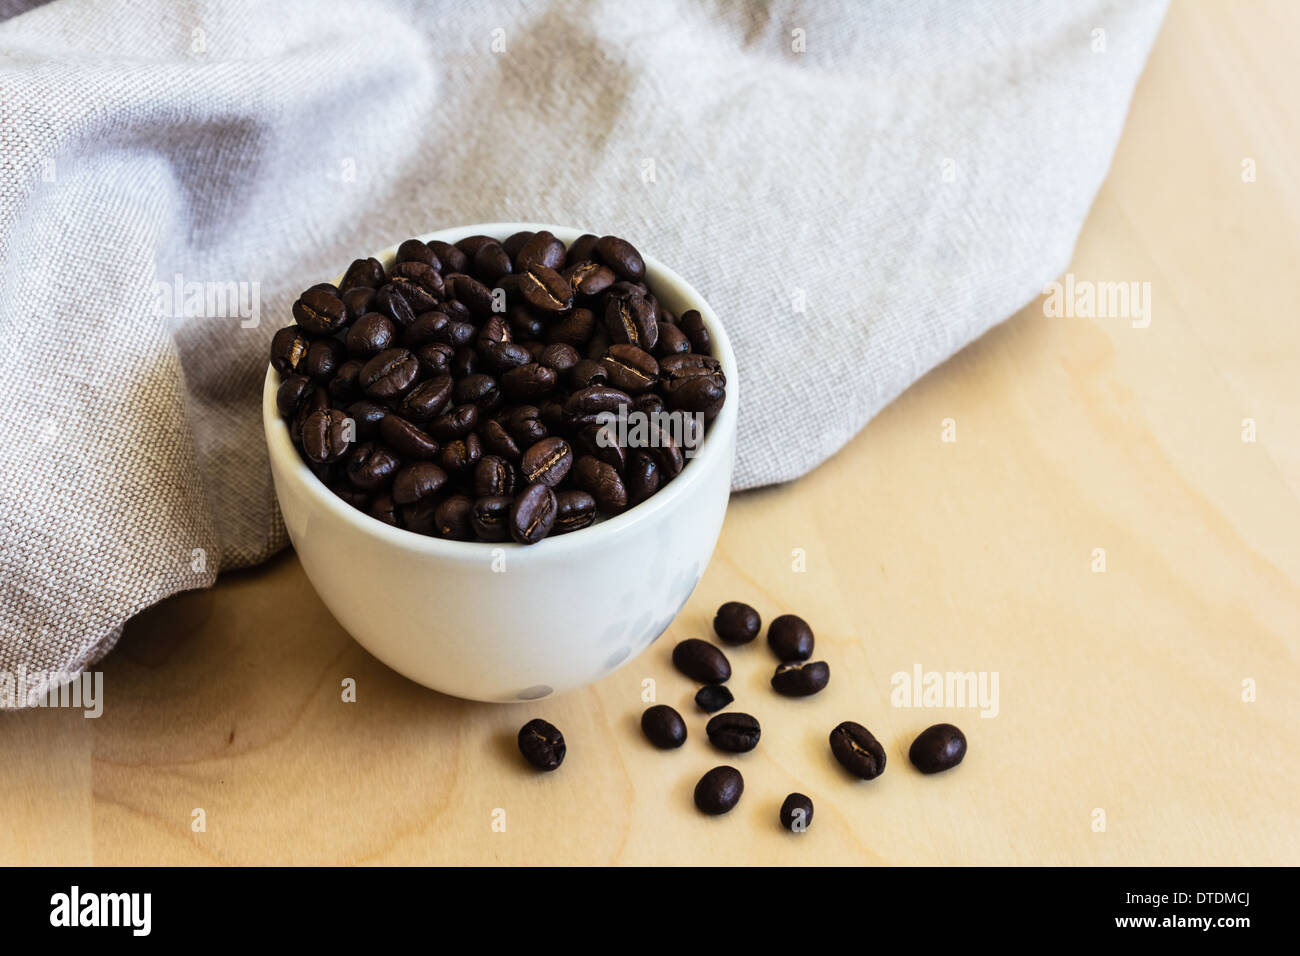 https://c8.alamy.com/comp/DTDMCJ/cup-full-of-coffee-beans-on-the-cloth-sack-DTDMCJ.jpg